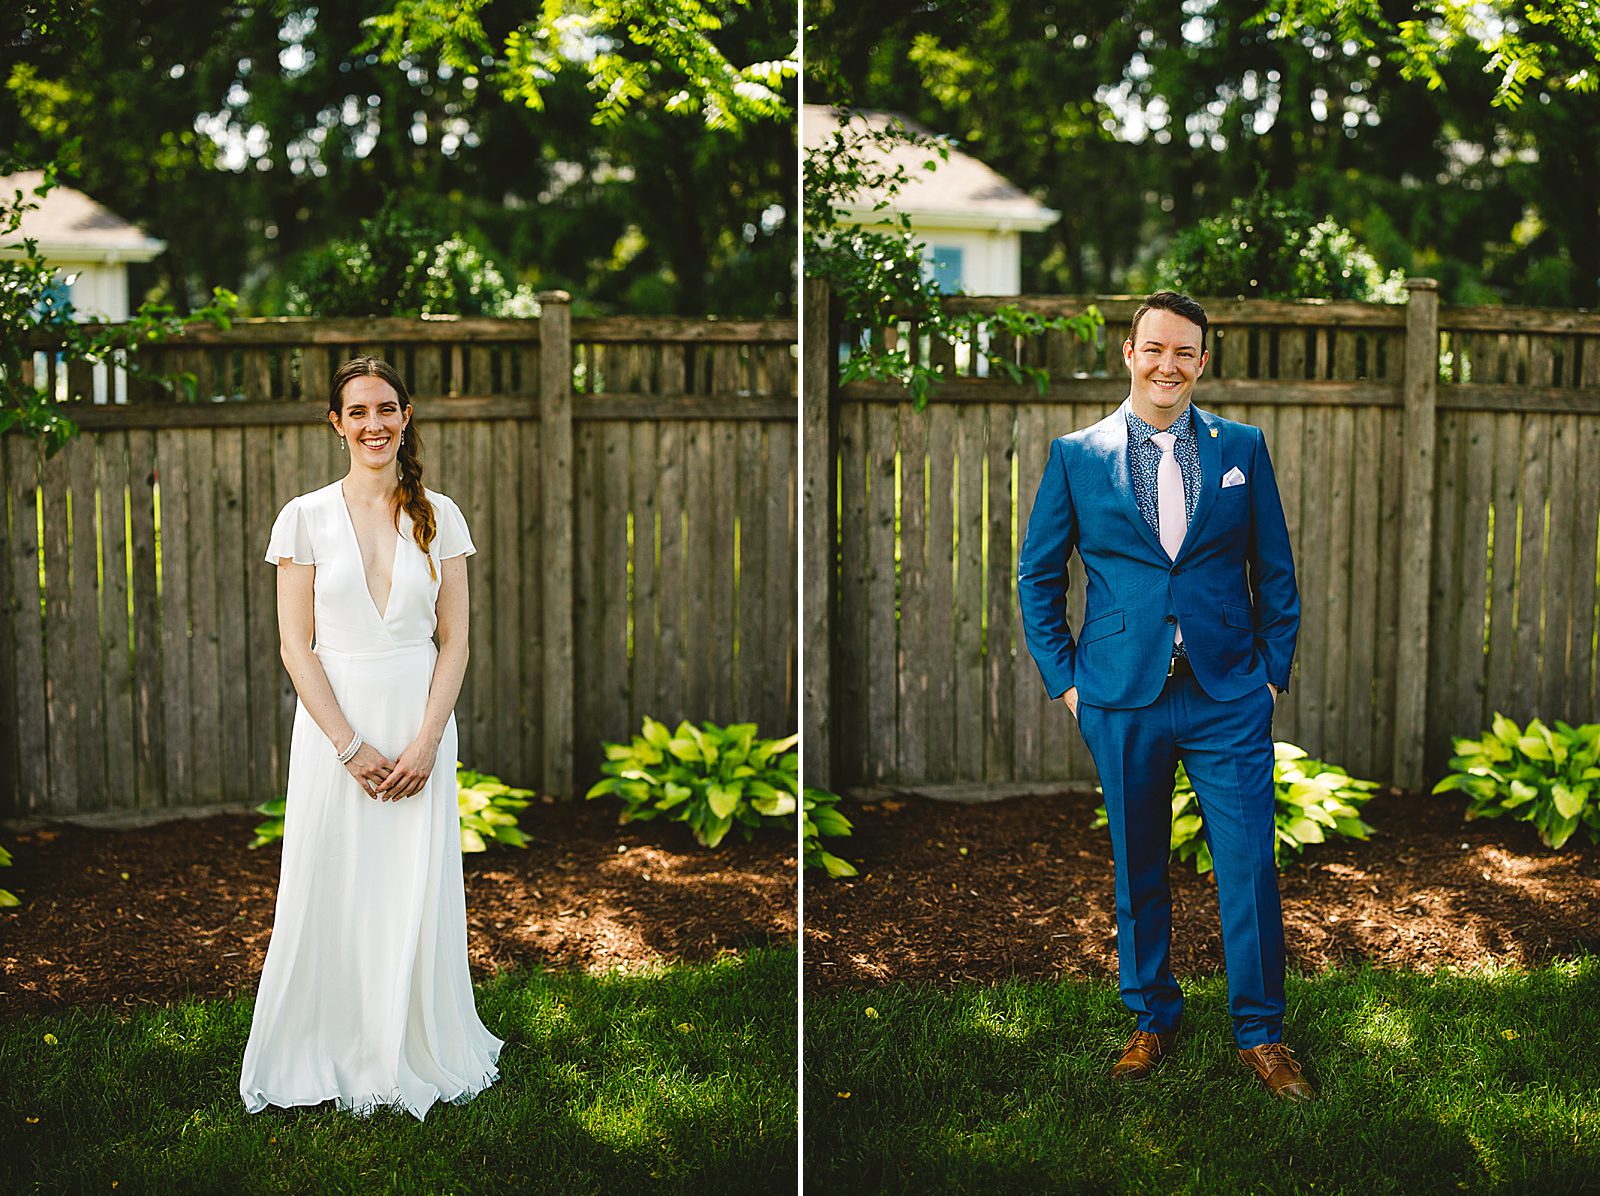 10 bride and groom in backyard wedding - Amazing Wedding in Backyard // Kristen + Jeff